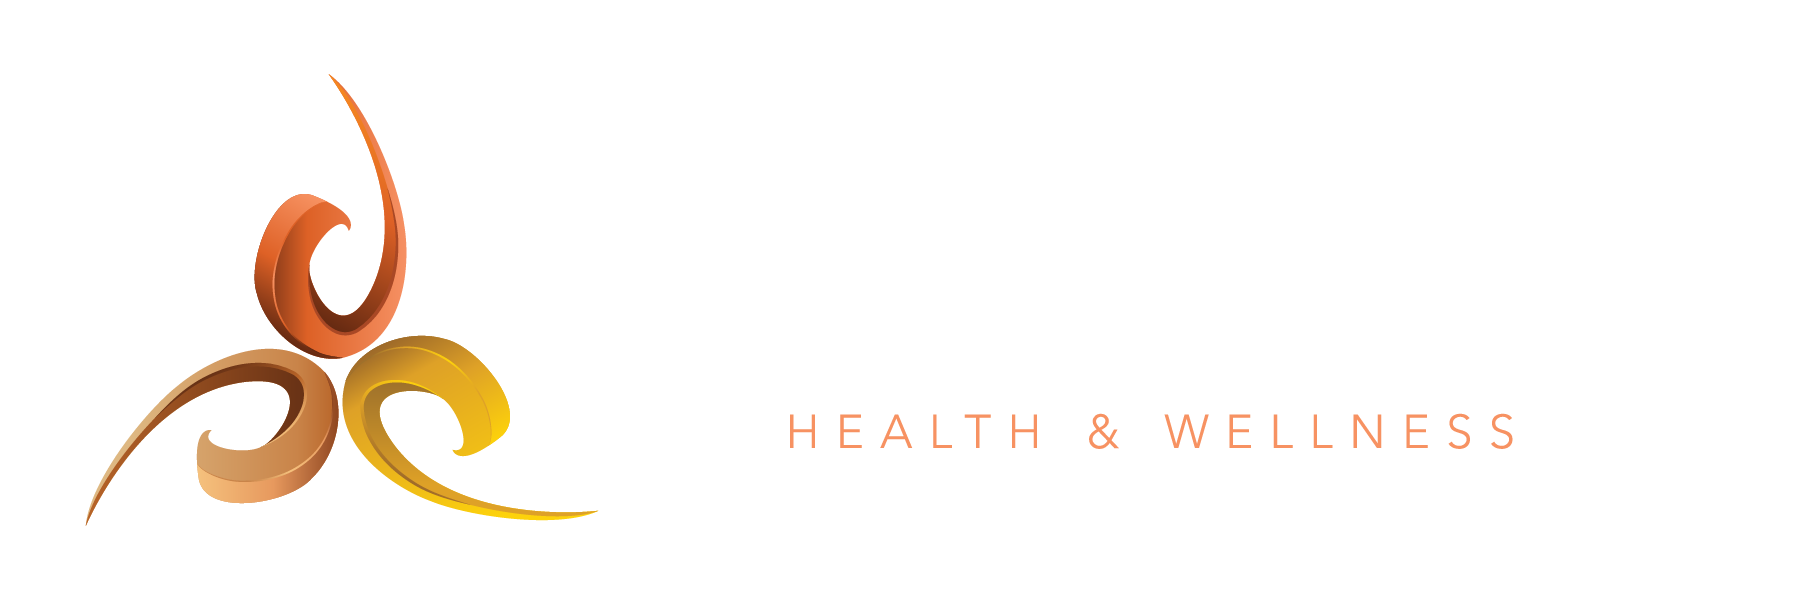 Atervi Health and Wellness